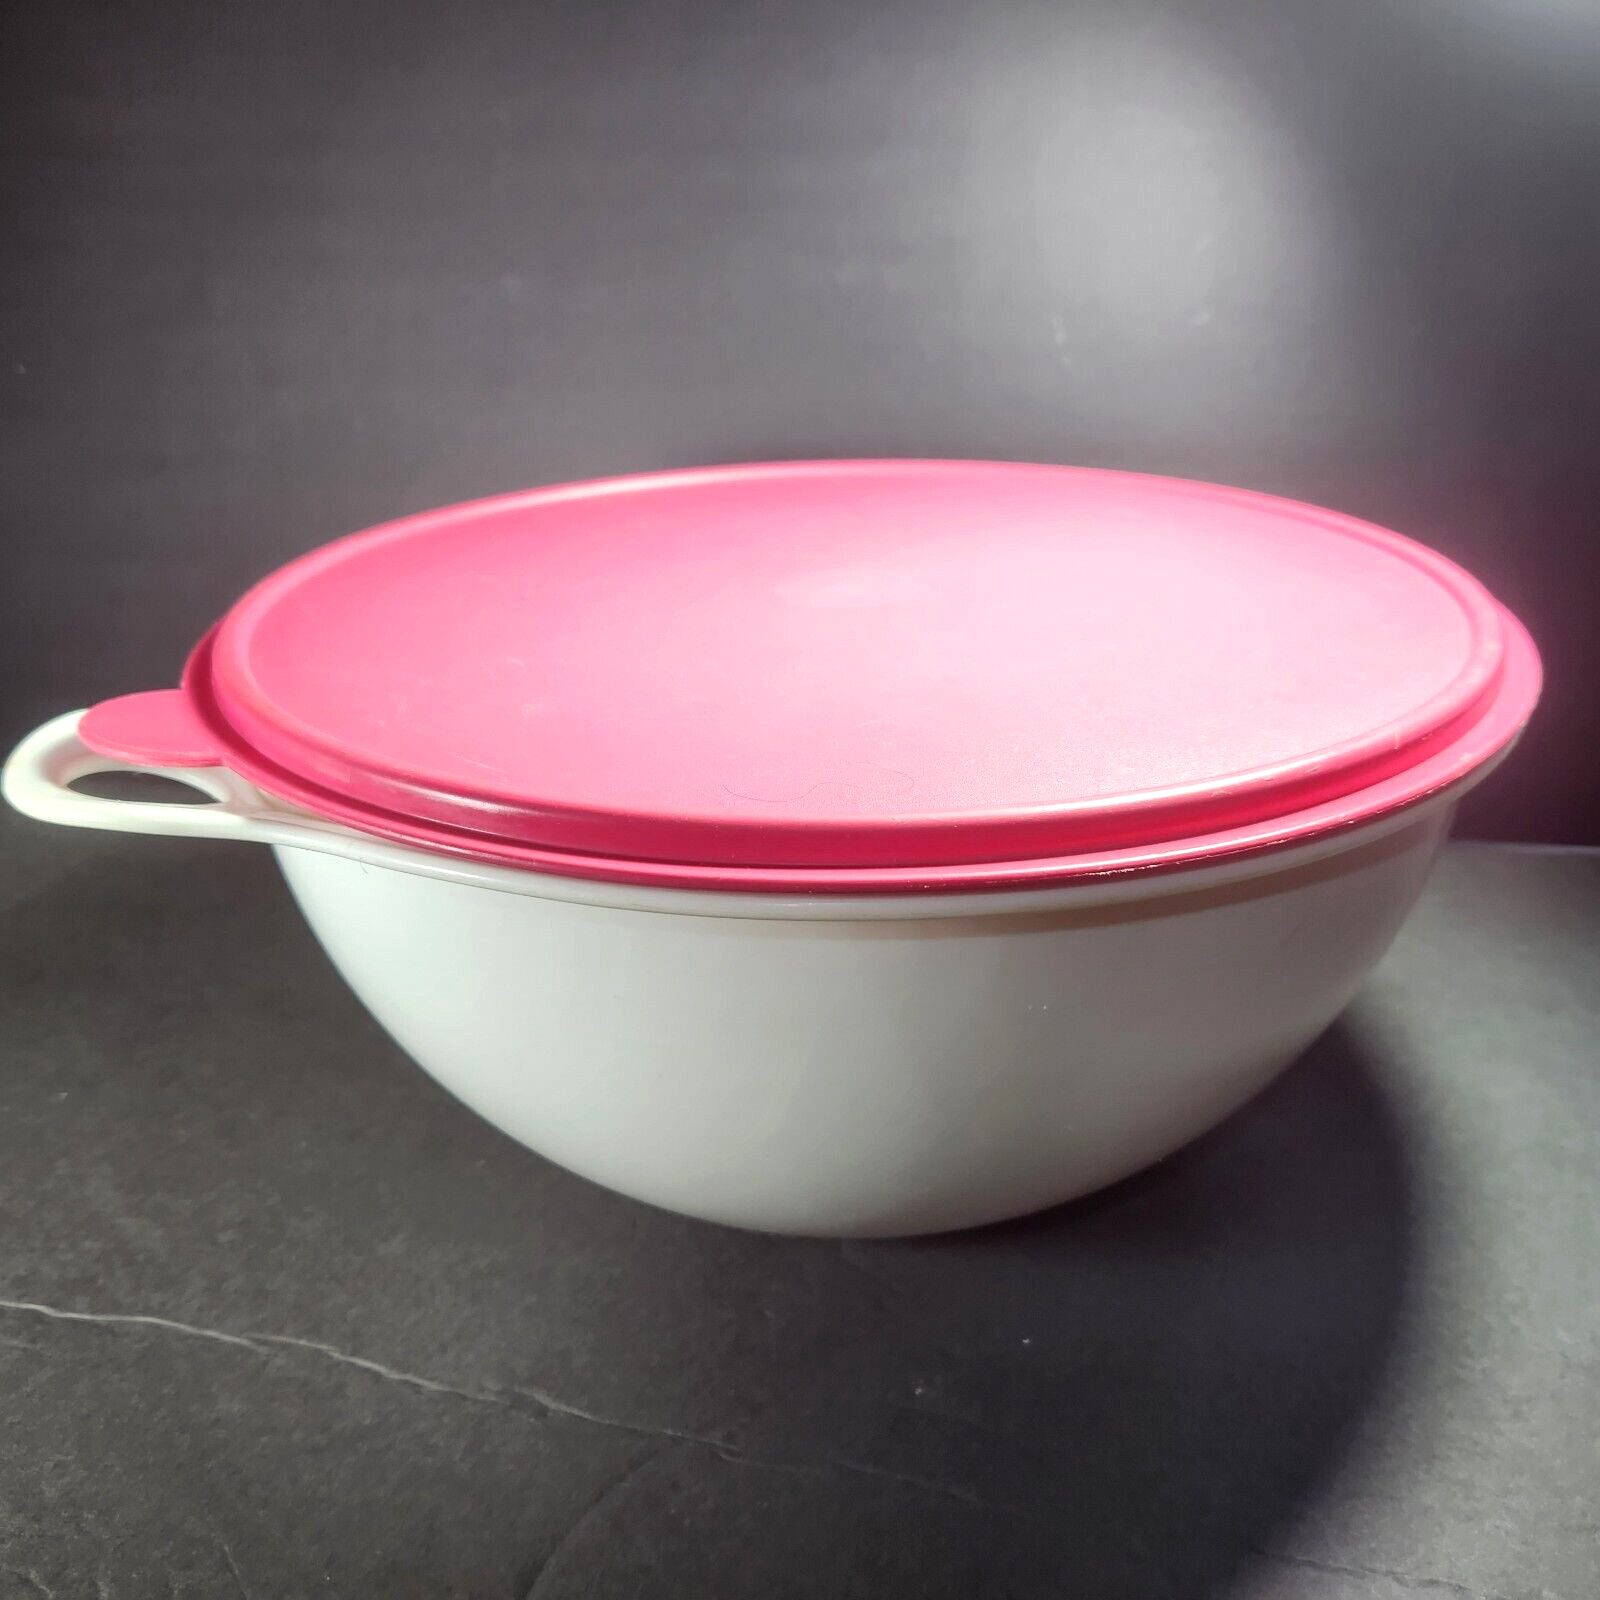 Tupperware Thatsa Bowl with Pink Seal 32 Cup Capacity Large Mixing Bowl 25398-3